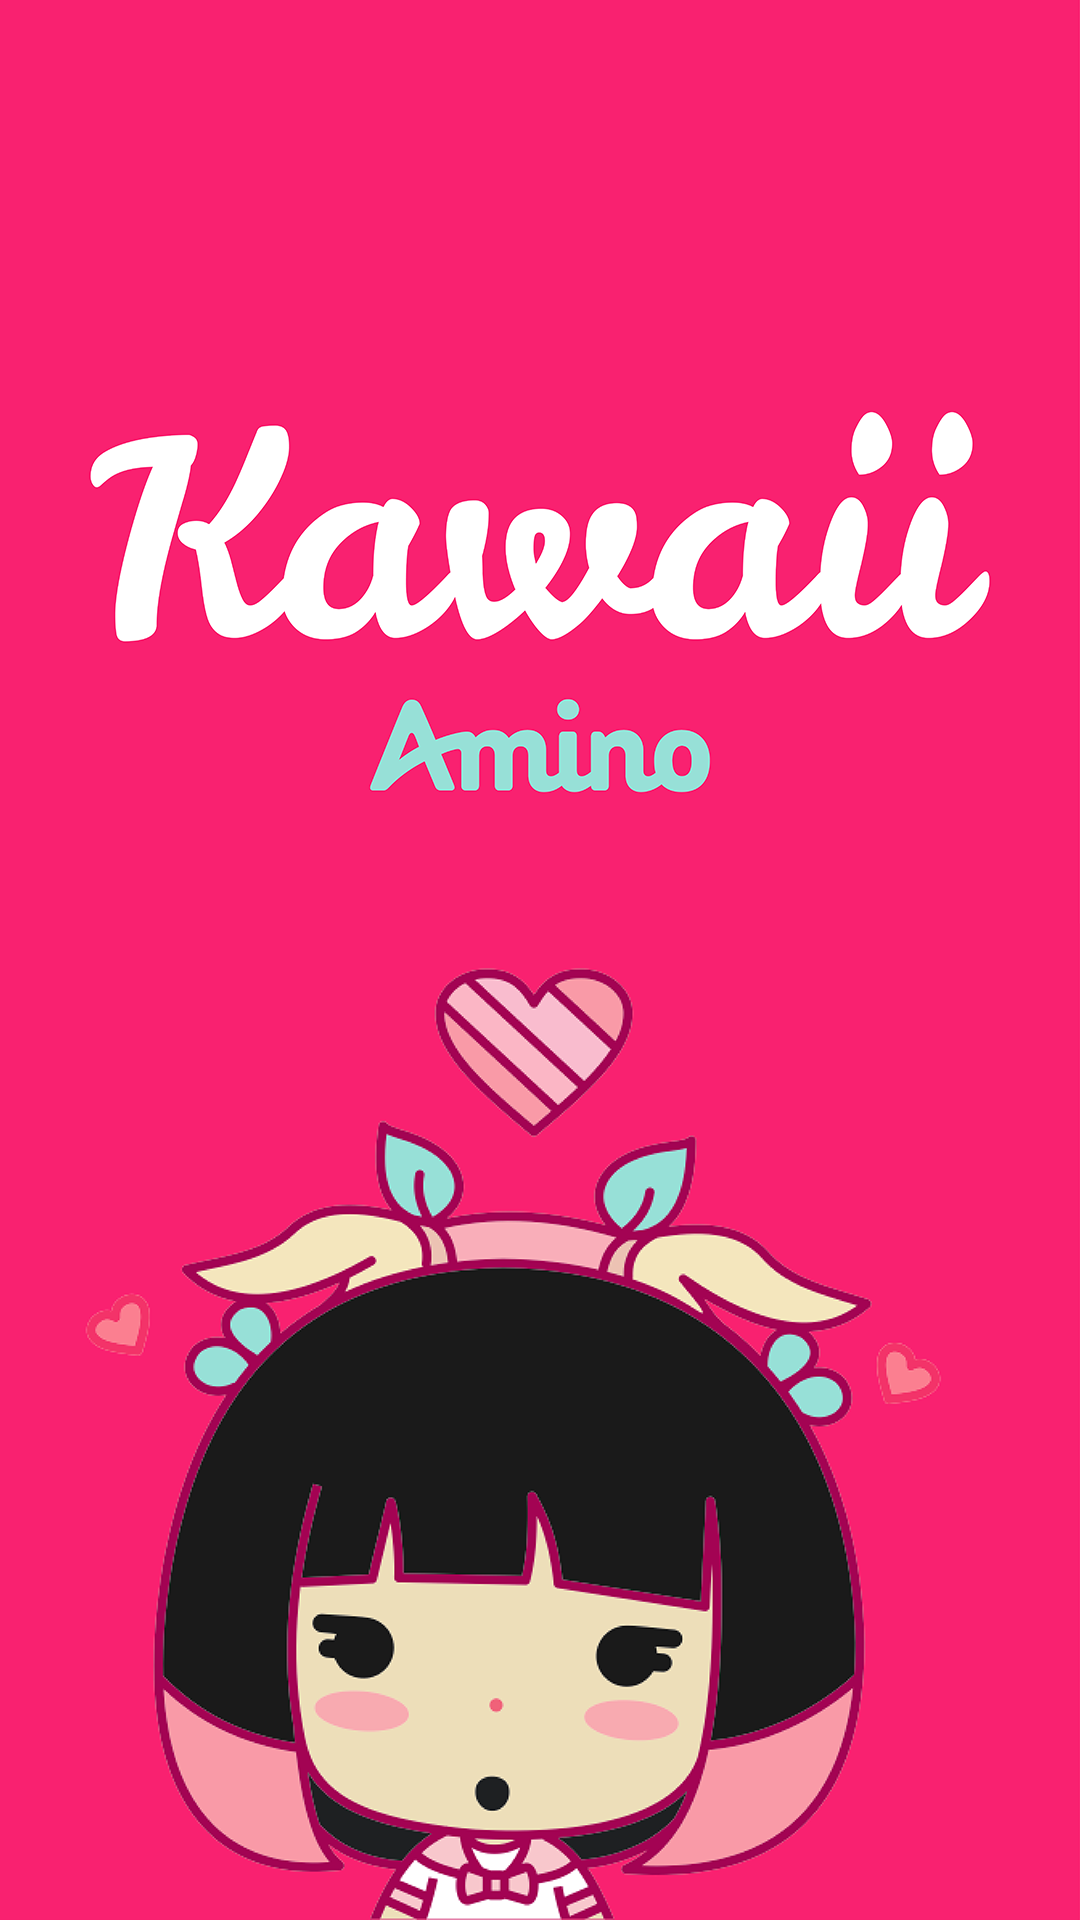 Kawaii Amino en Español APK 3.4.33514 for Android – Download Kawaii Amino  en Español APK Latest Version from APKFab.com